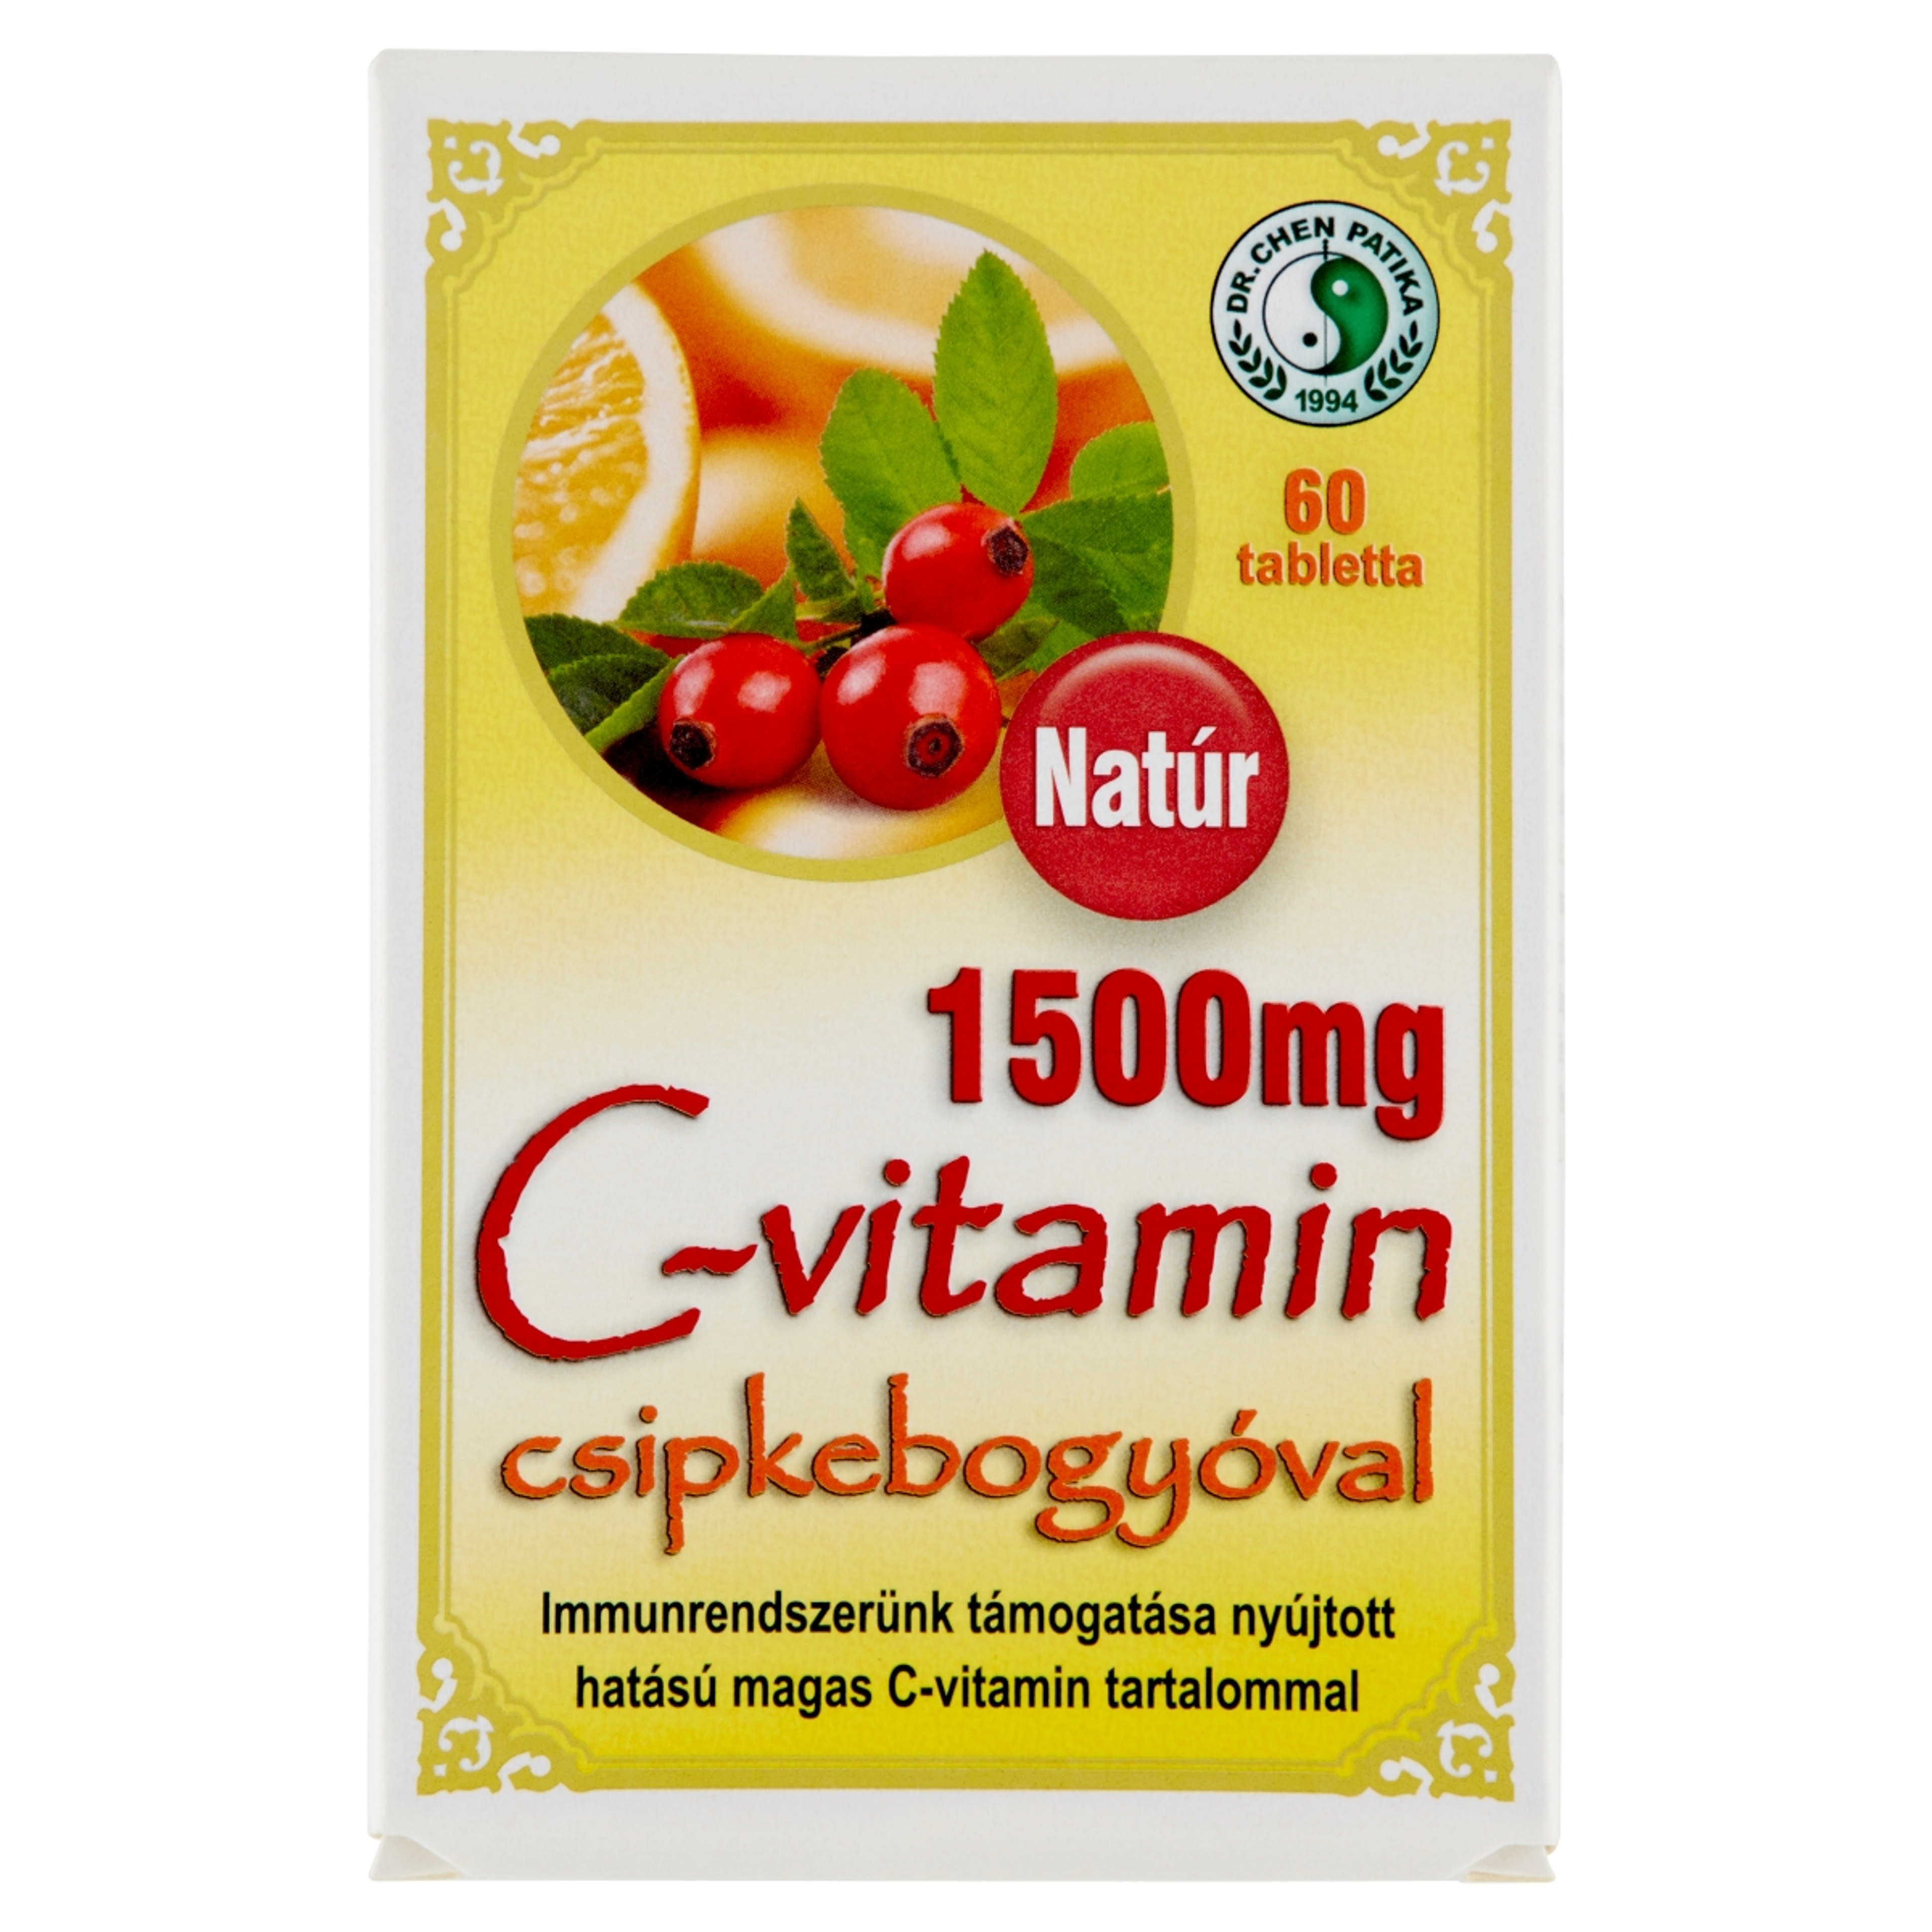 Dr.Chen Patika Natur C-Vitamin csipkebogyóval Tabletta - 60 db